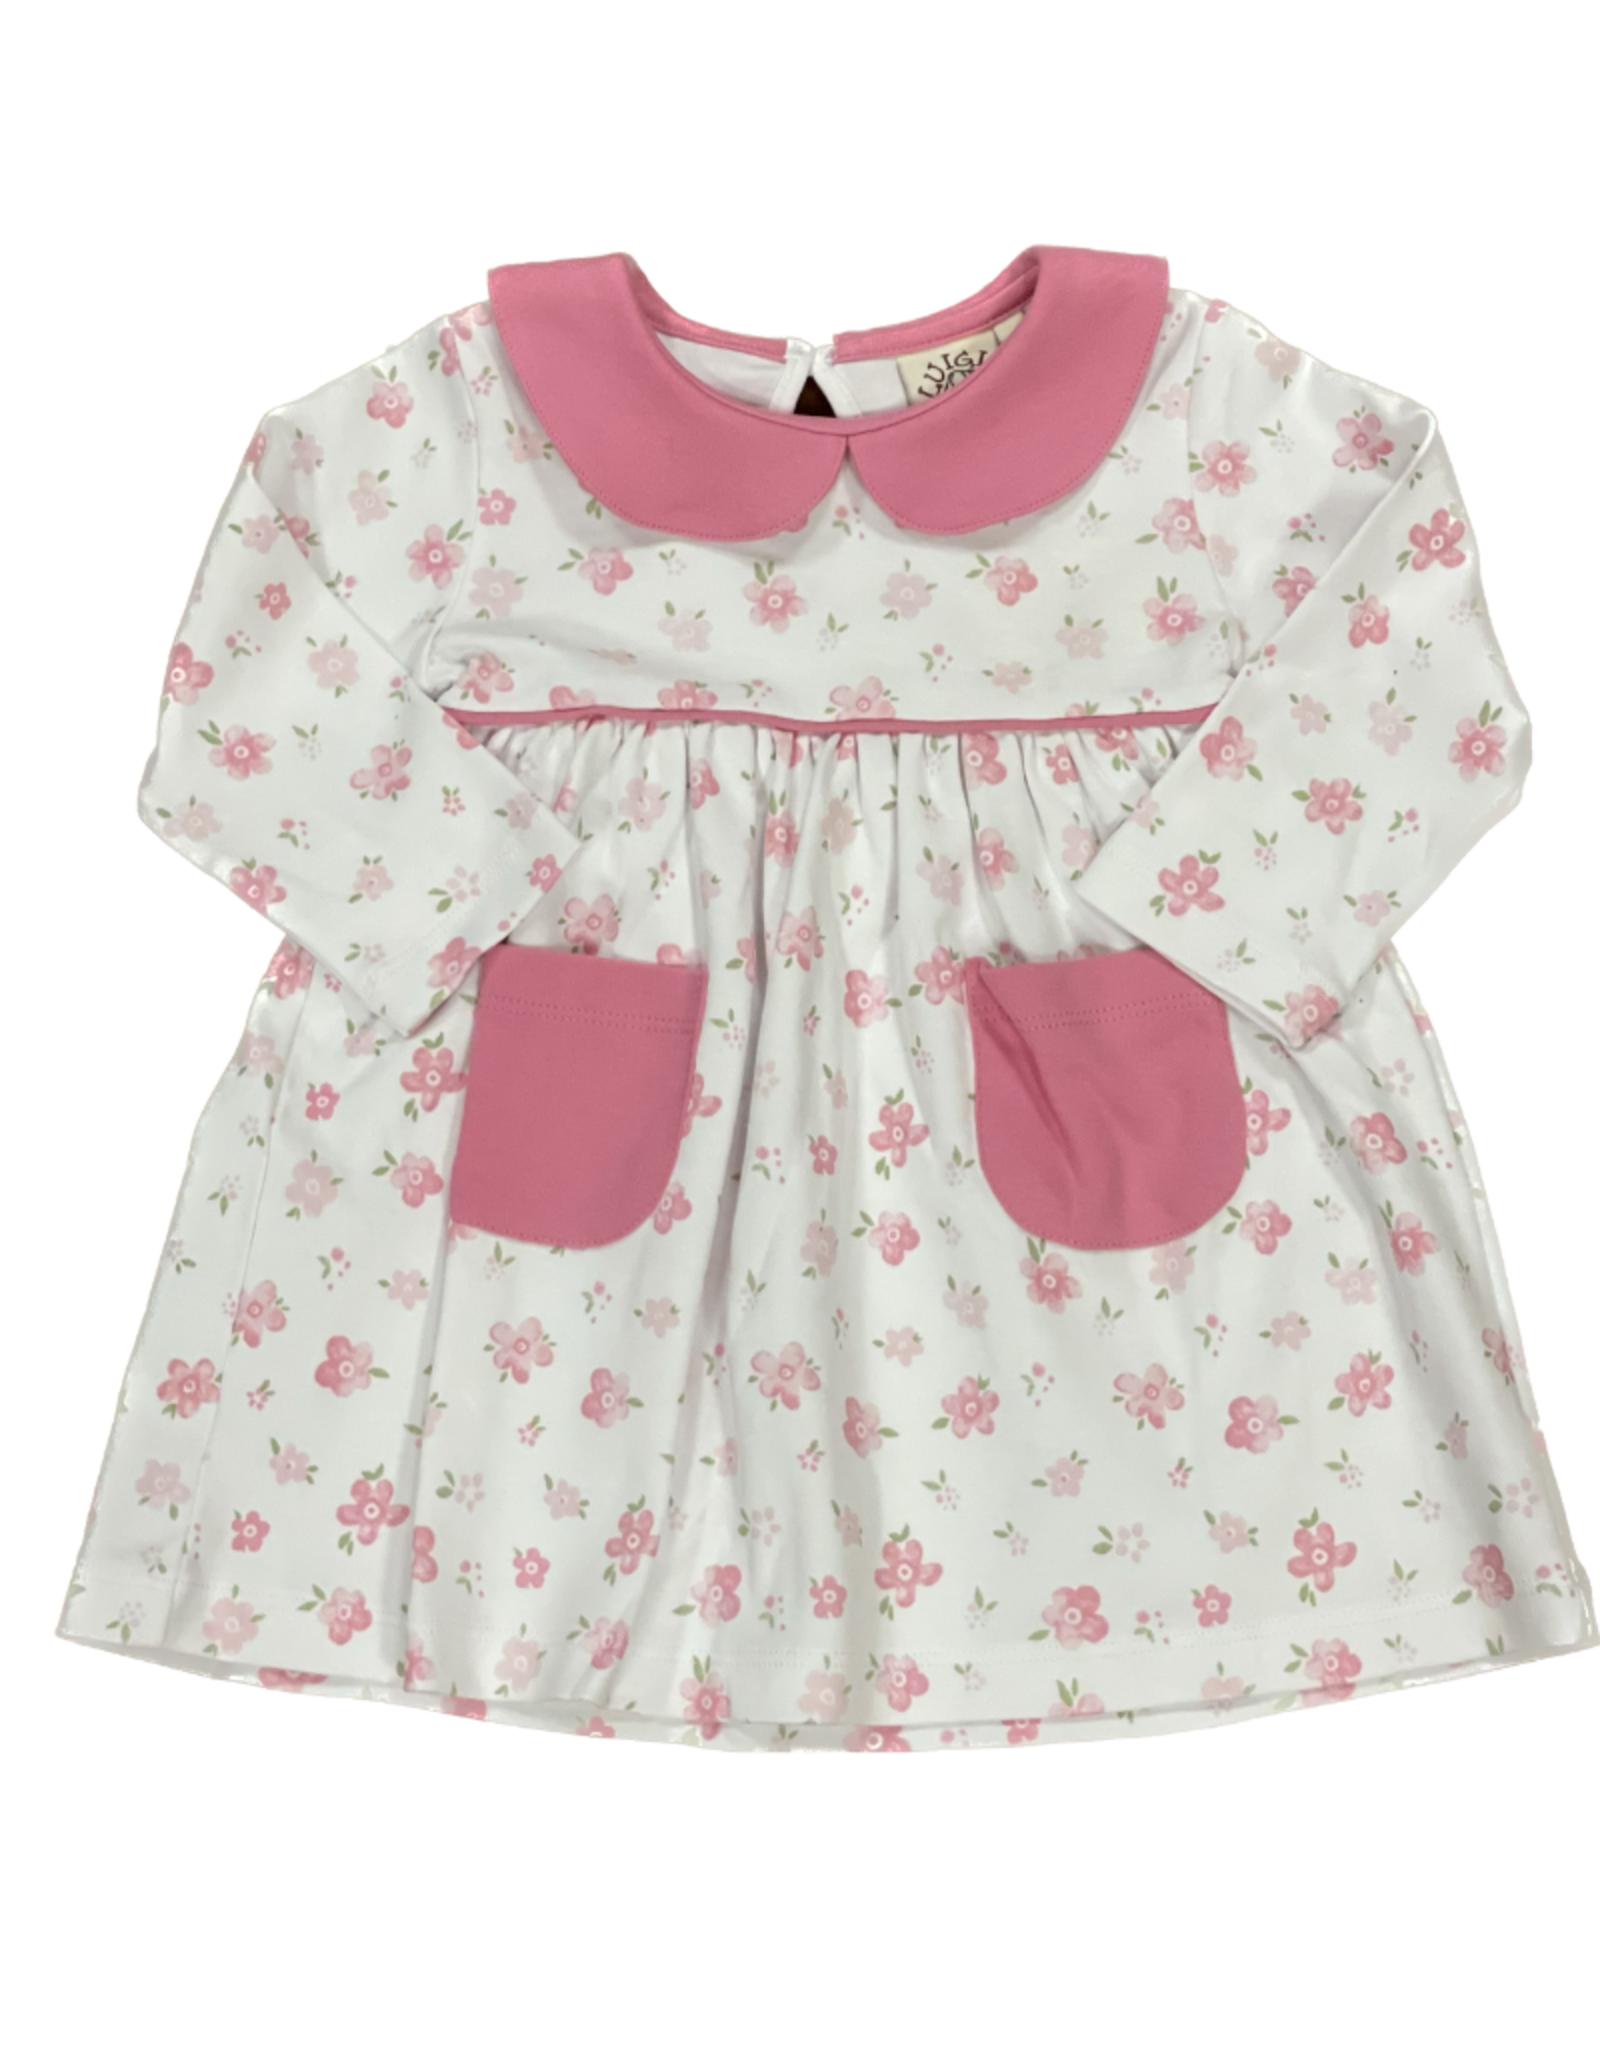 Luigi LS Pink Floral Print Dress with Pockets